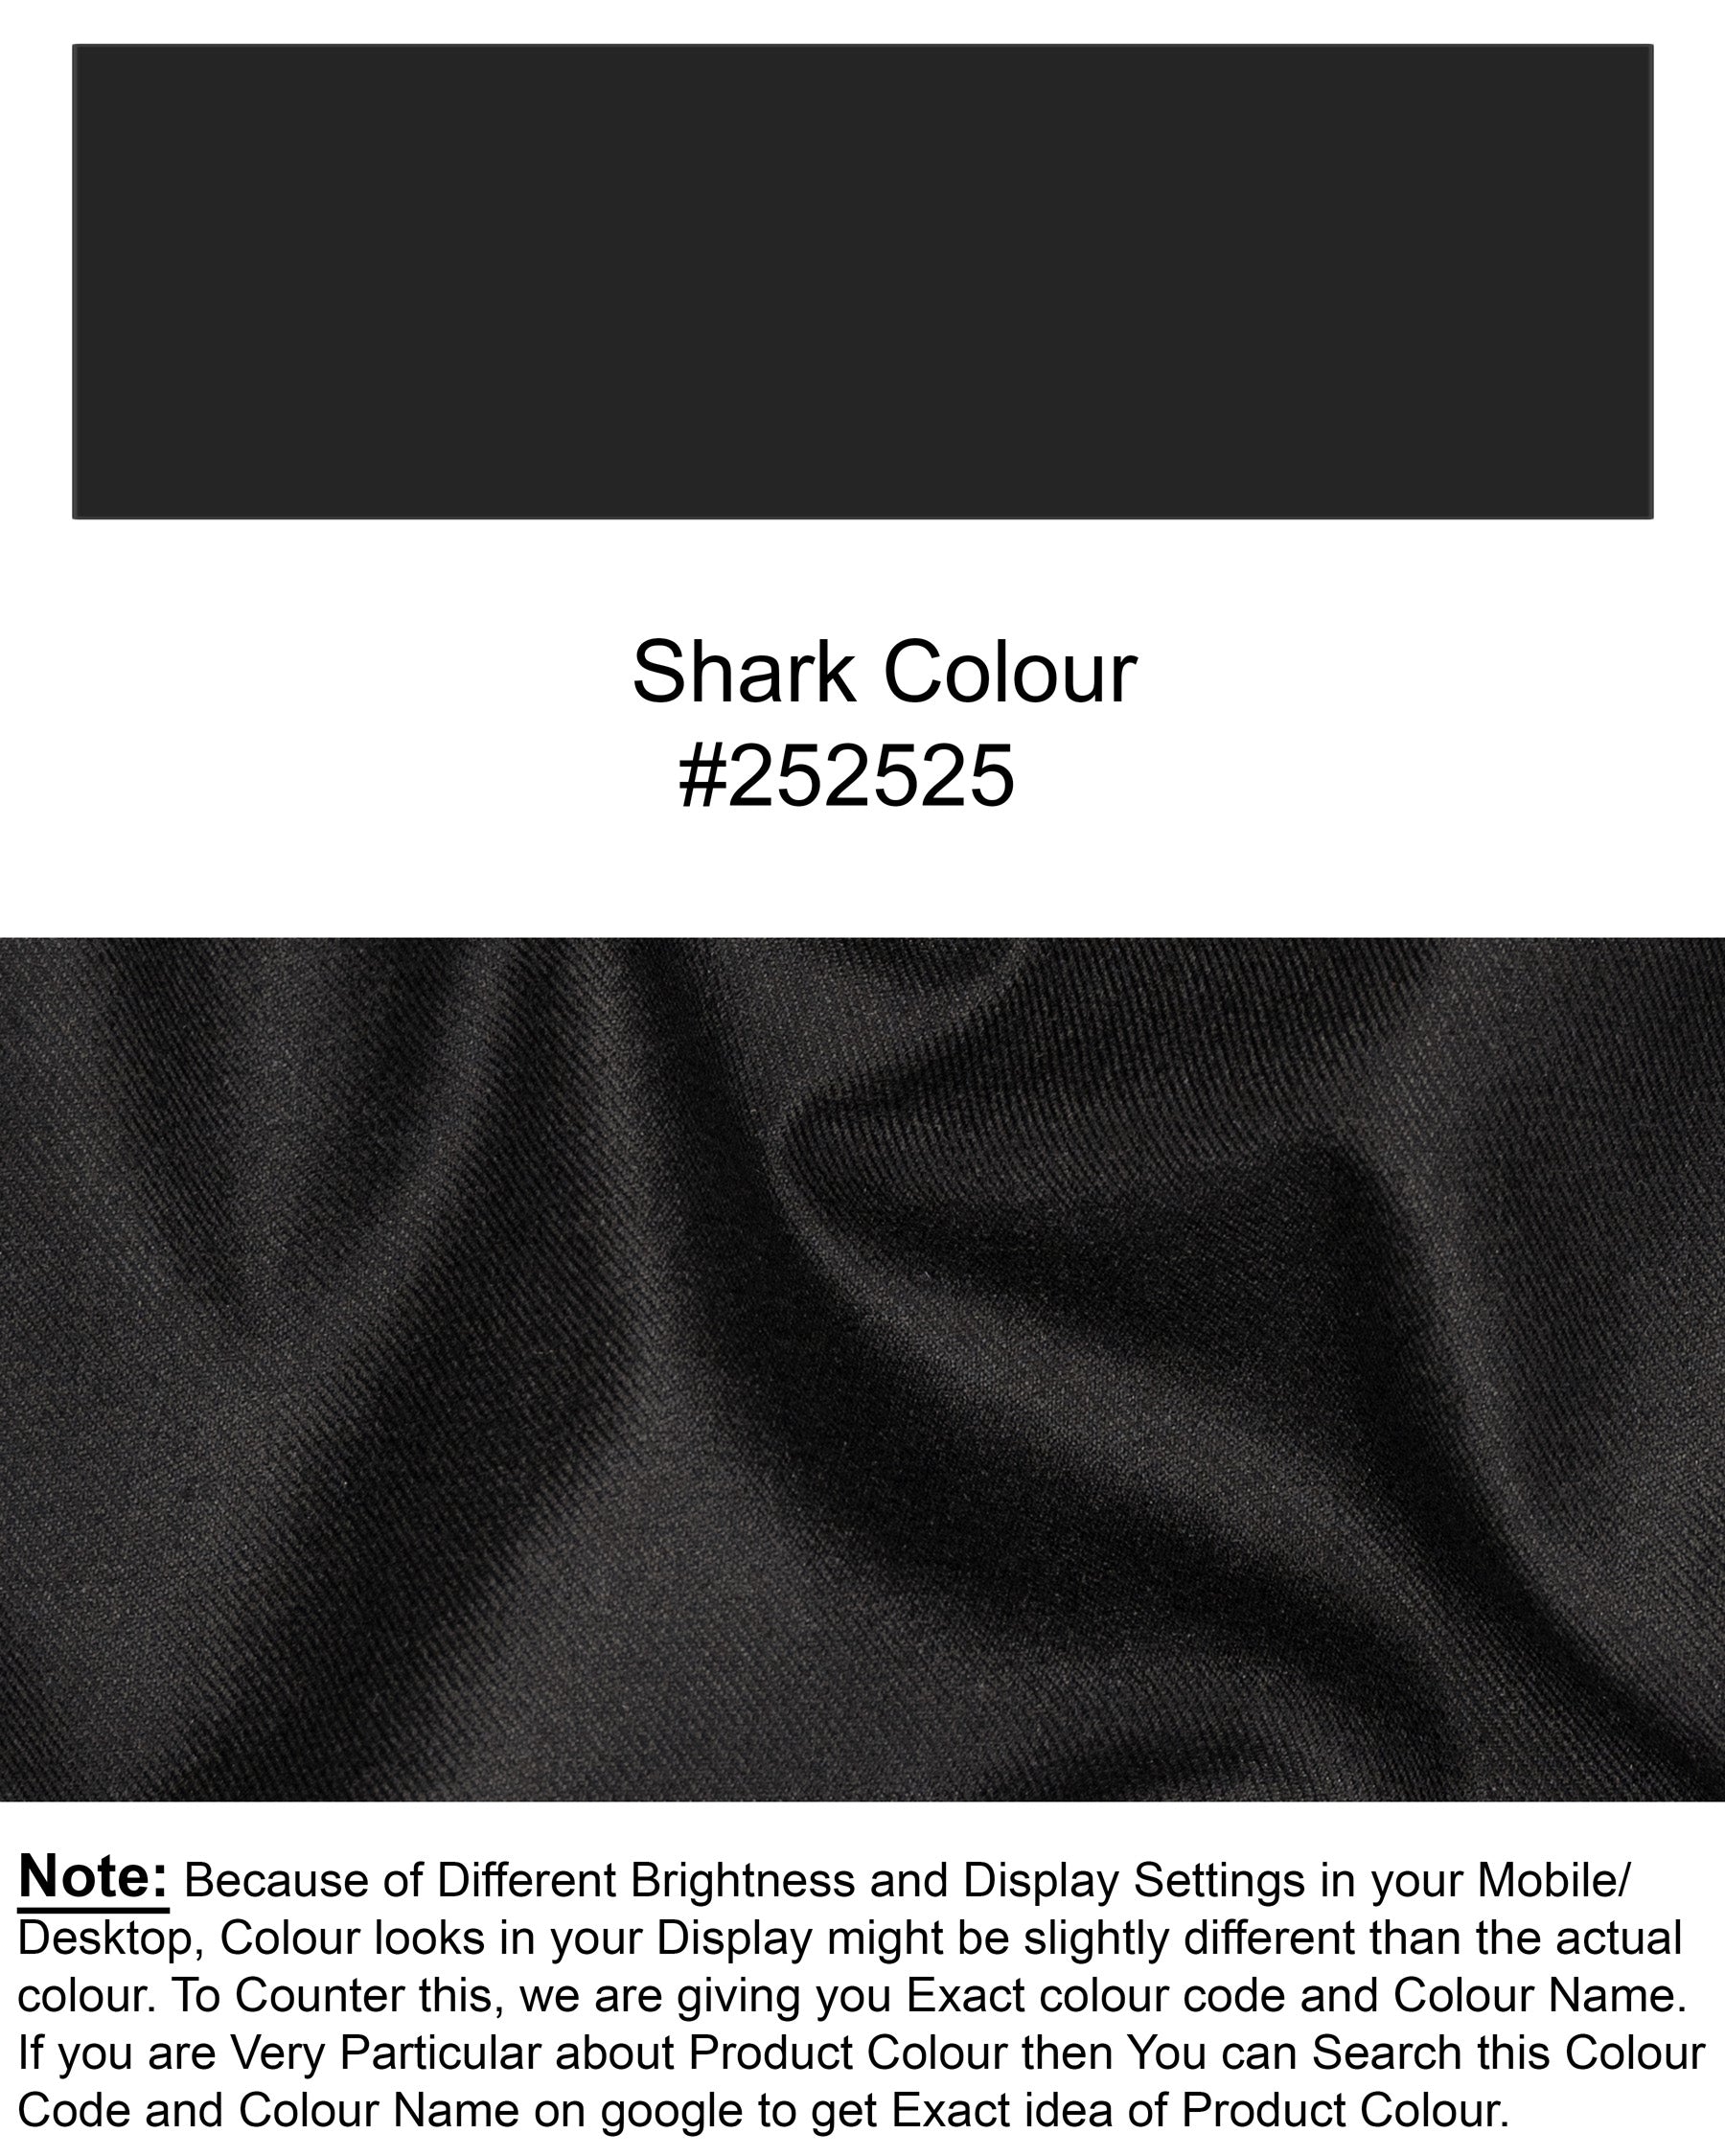 Shark Black Wool Rich Blazer BL1441-D24-36,BL1441-D24-38,BL1441-D24-40,BL1441-D24-42,BL1441-D24-44,BL1441-D24-46,BL1441-D24-48,BL1441-D24-50,BL1441-D24-52,BL1441-D24-54,BL1441-D24-56,BL1441-D24-58,BL1441-D24-60